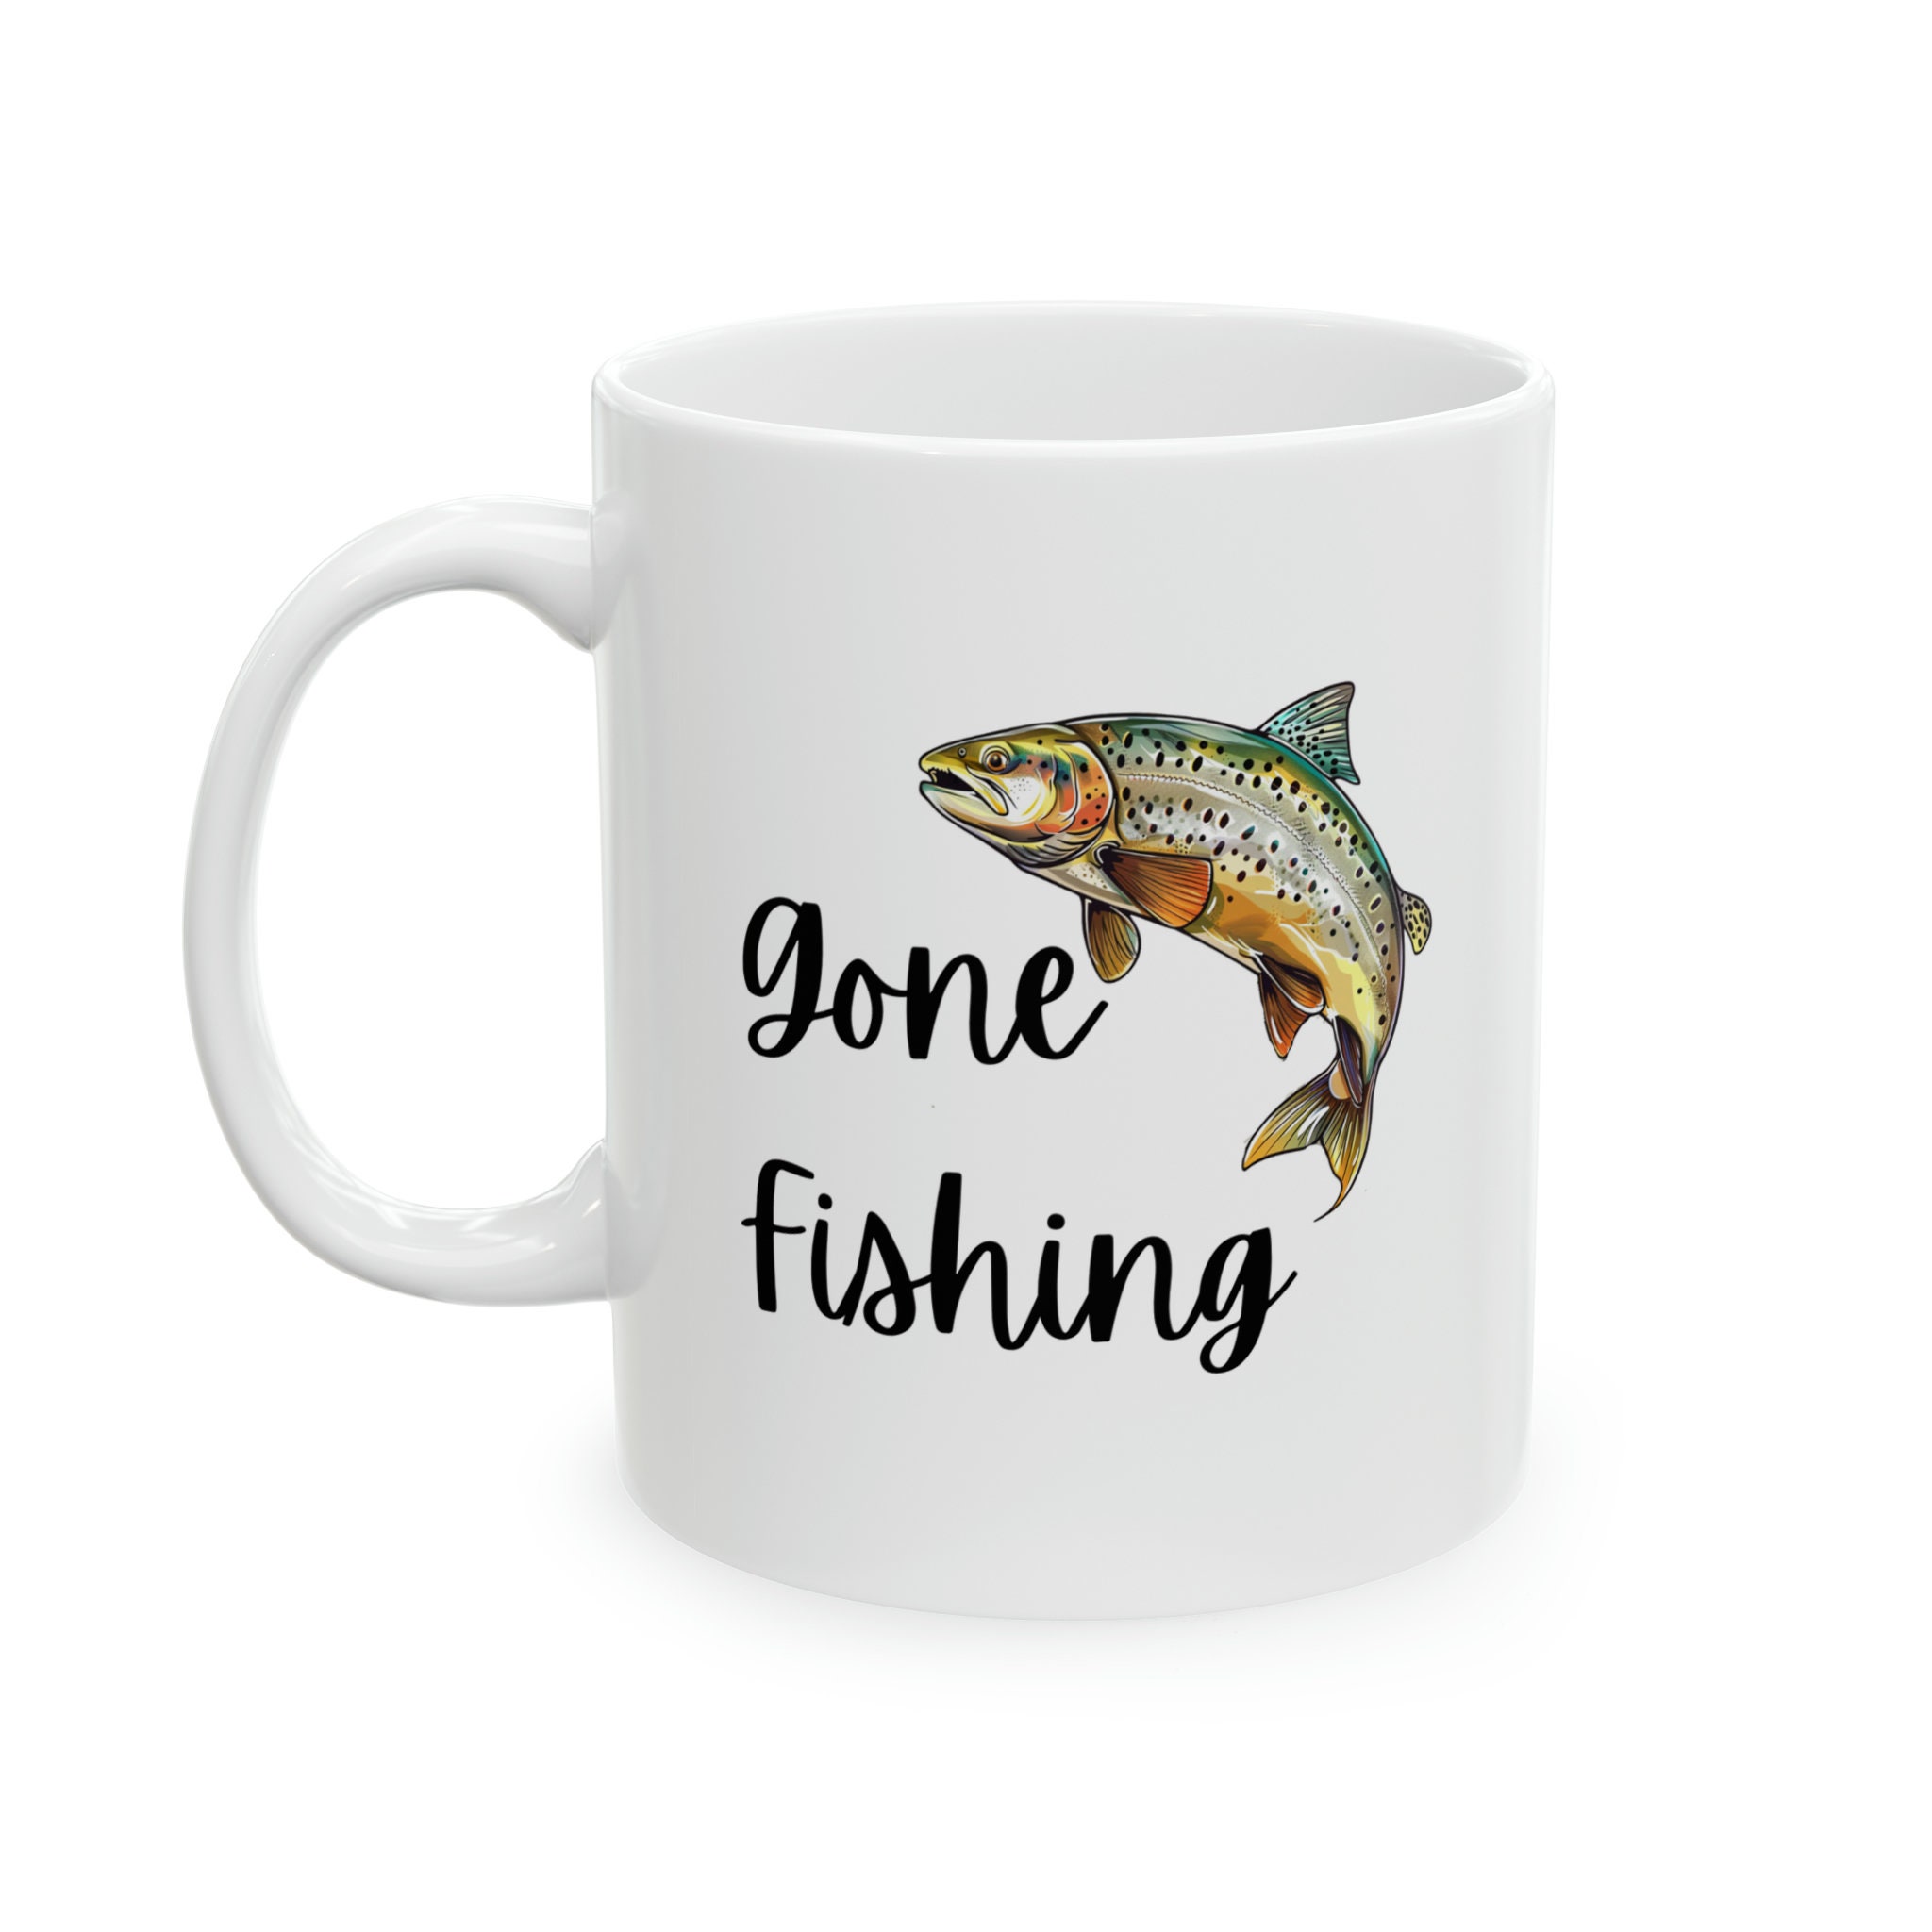 Fishing Mug For Men, Fishing Gift For Dad, Fishing Mug, Fishing Gift For Men